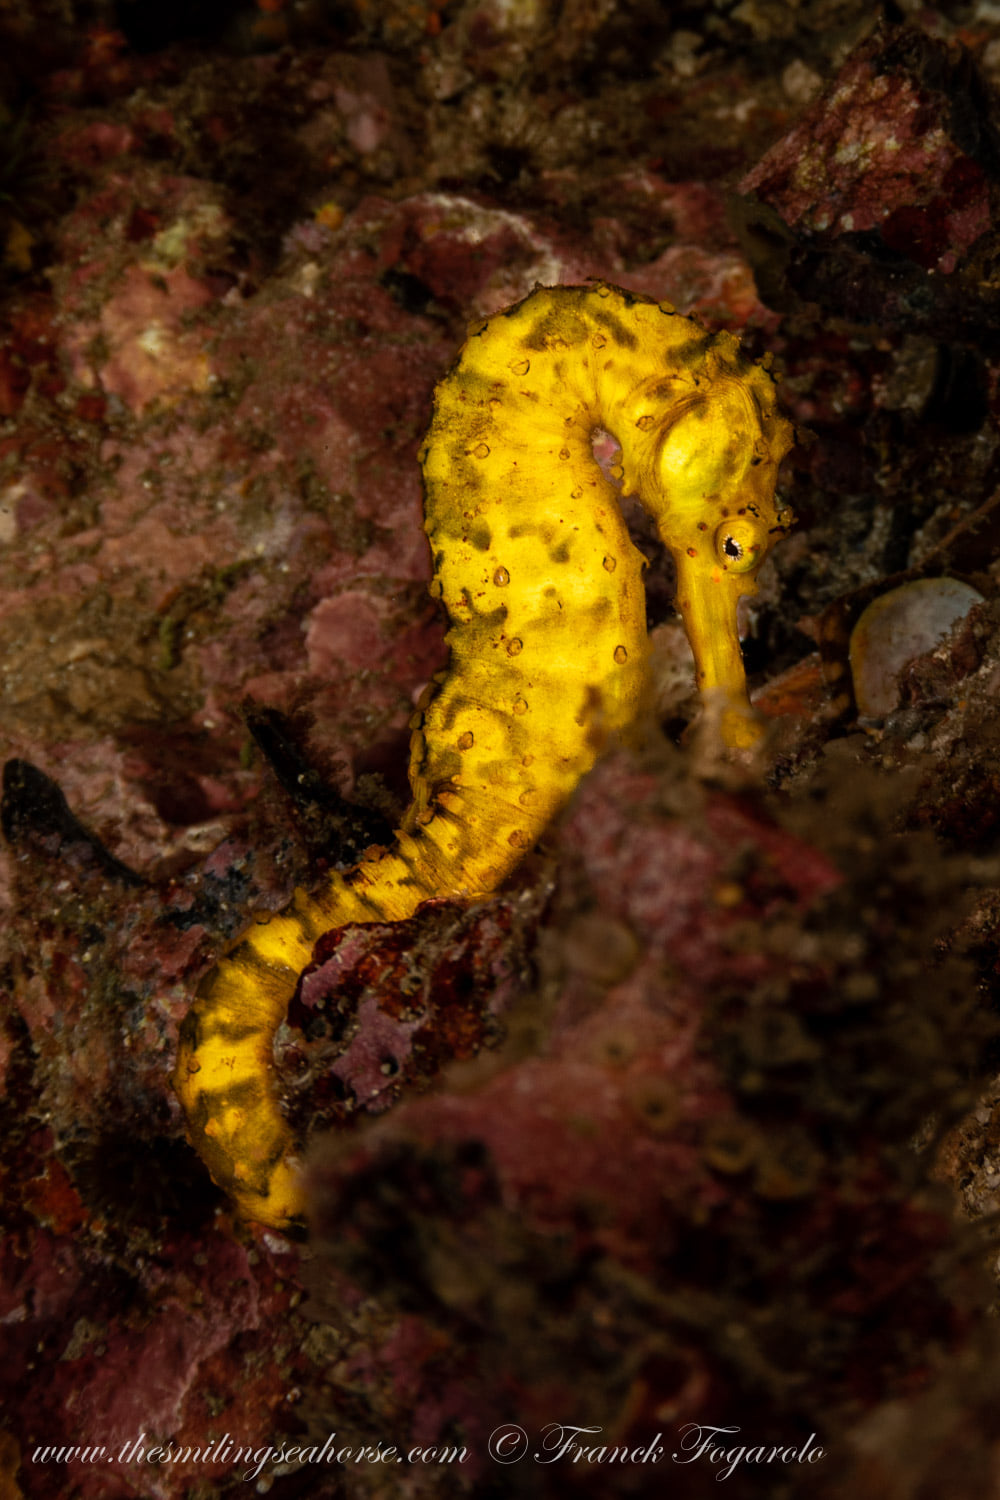 A shy tigertail seahorse